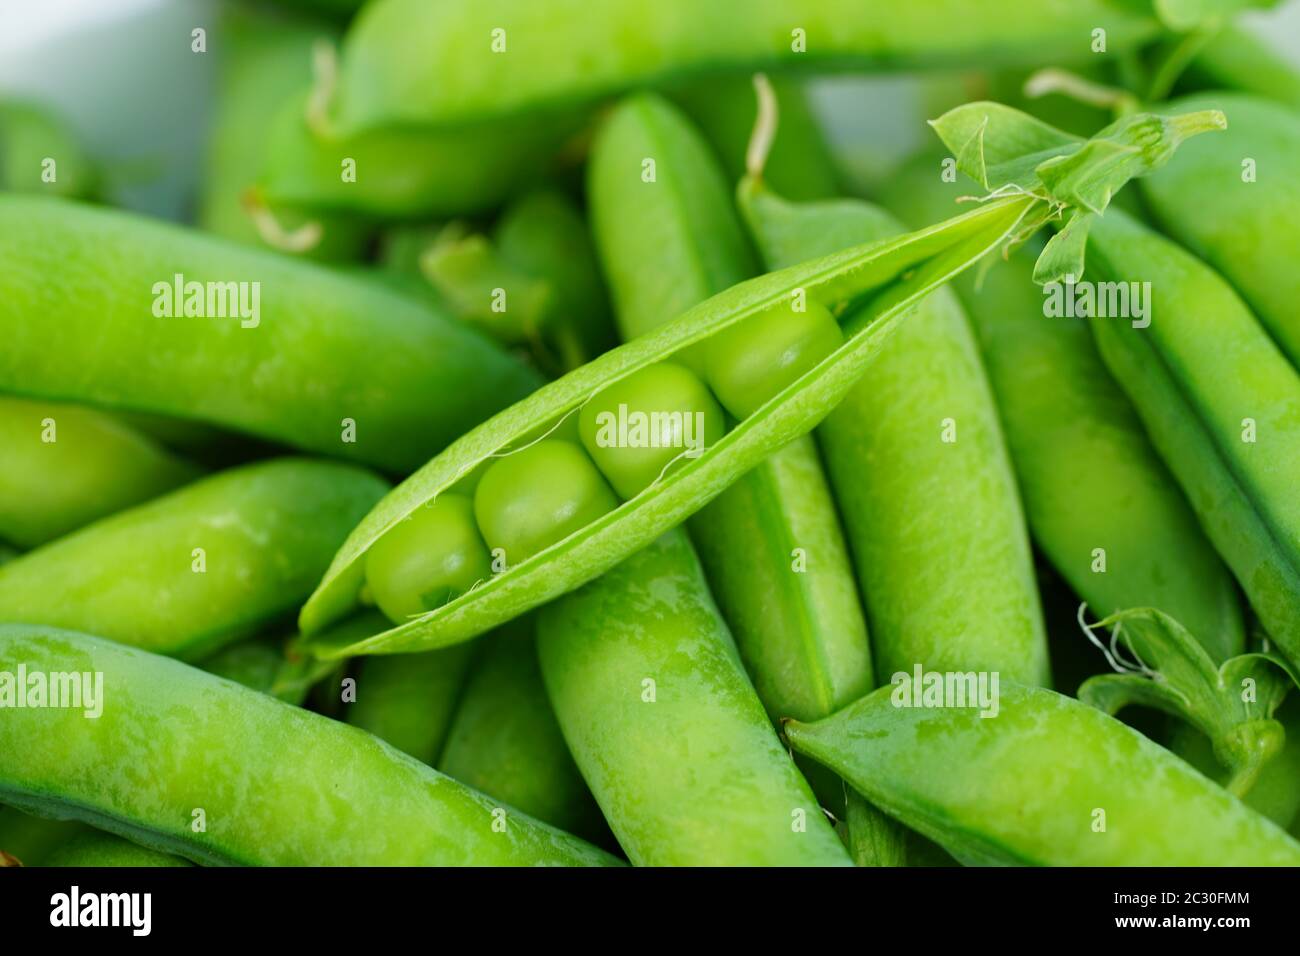 Bowl of freshly picked green garden peas Stock Photo